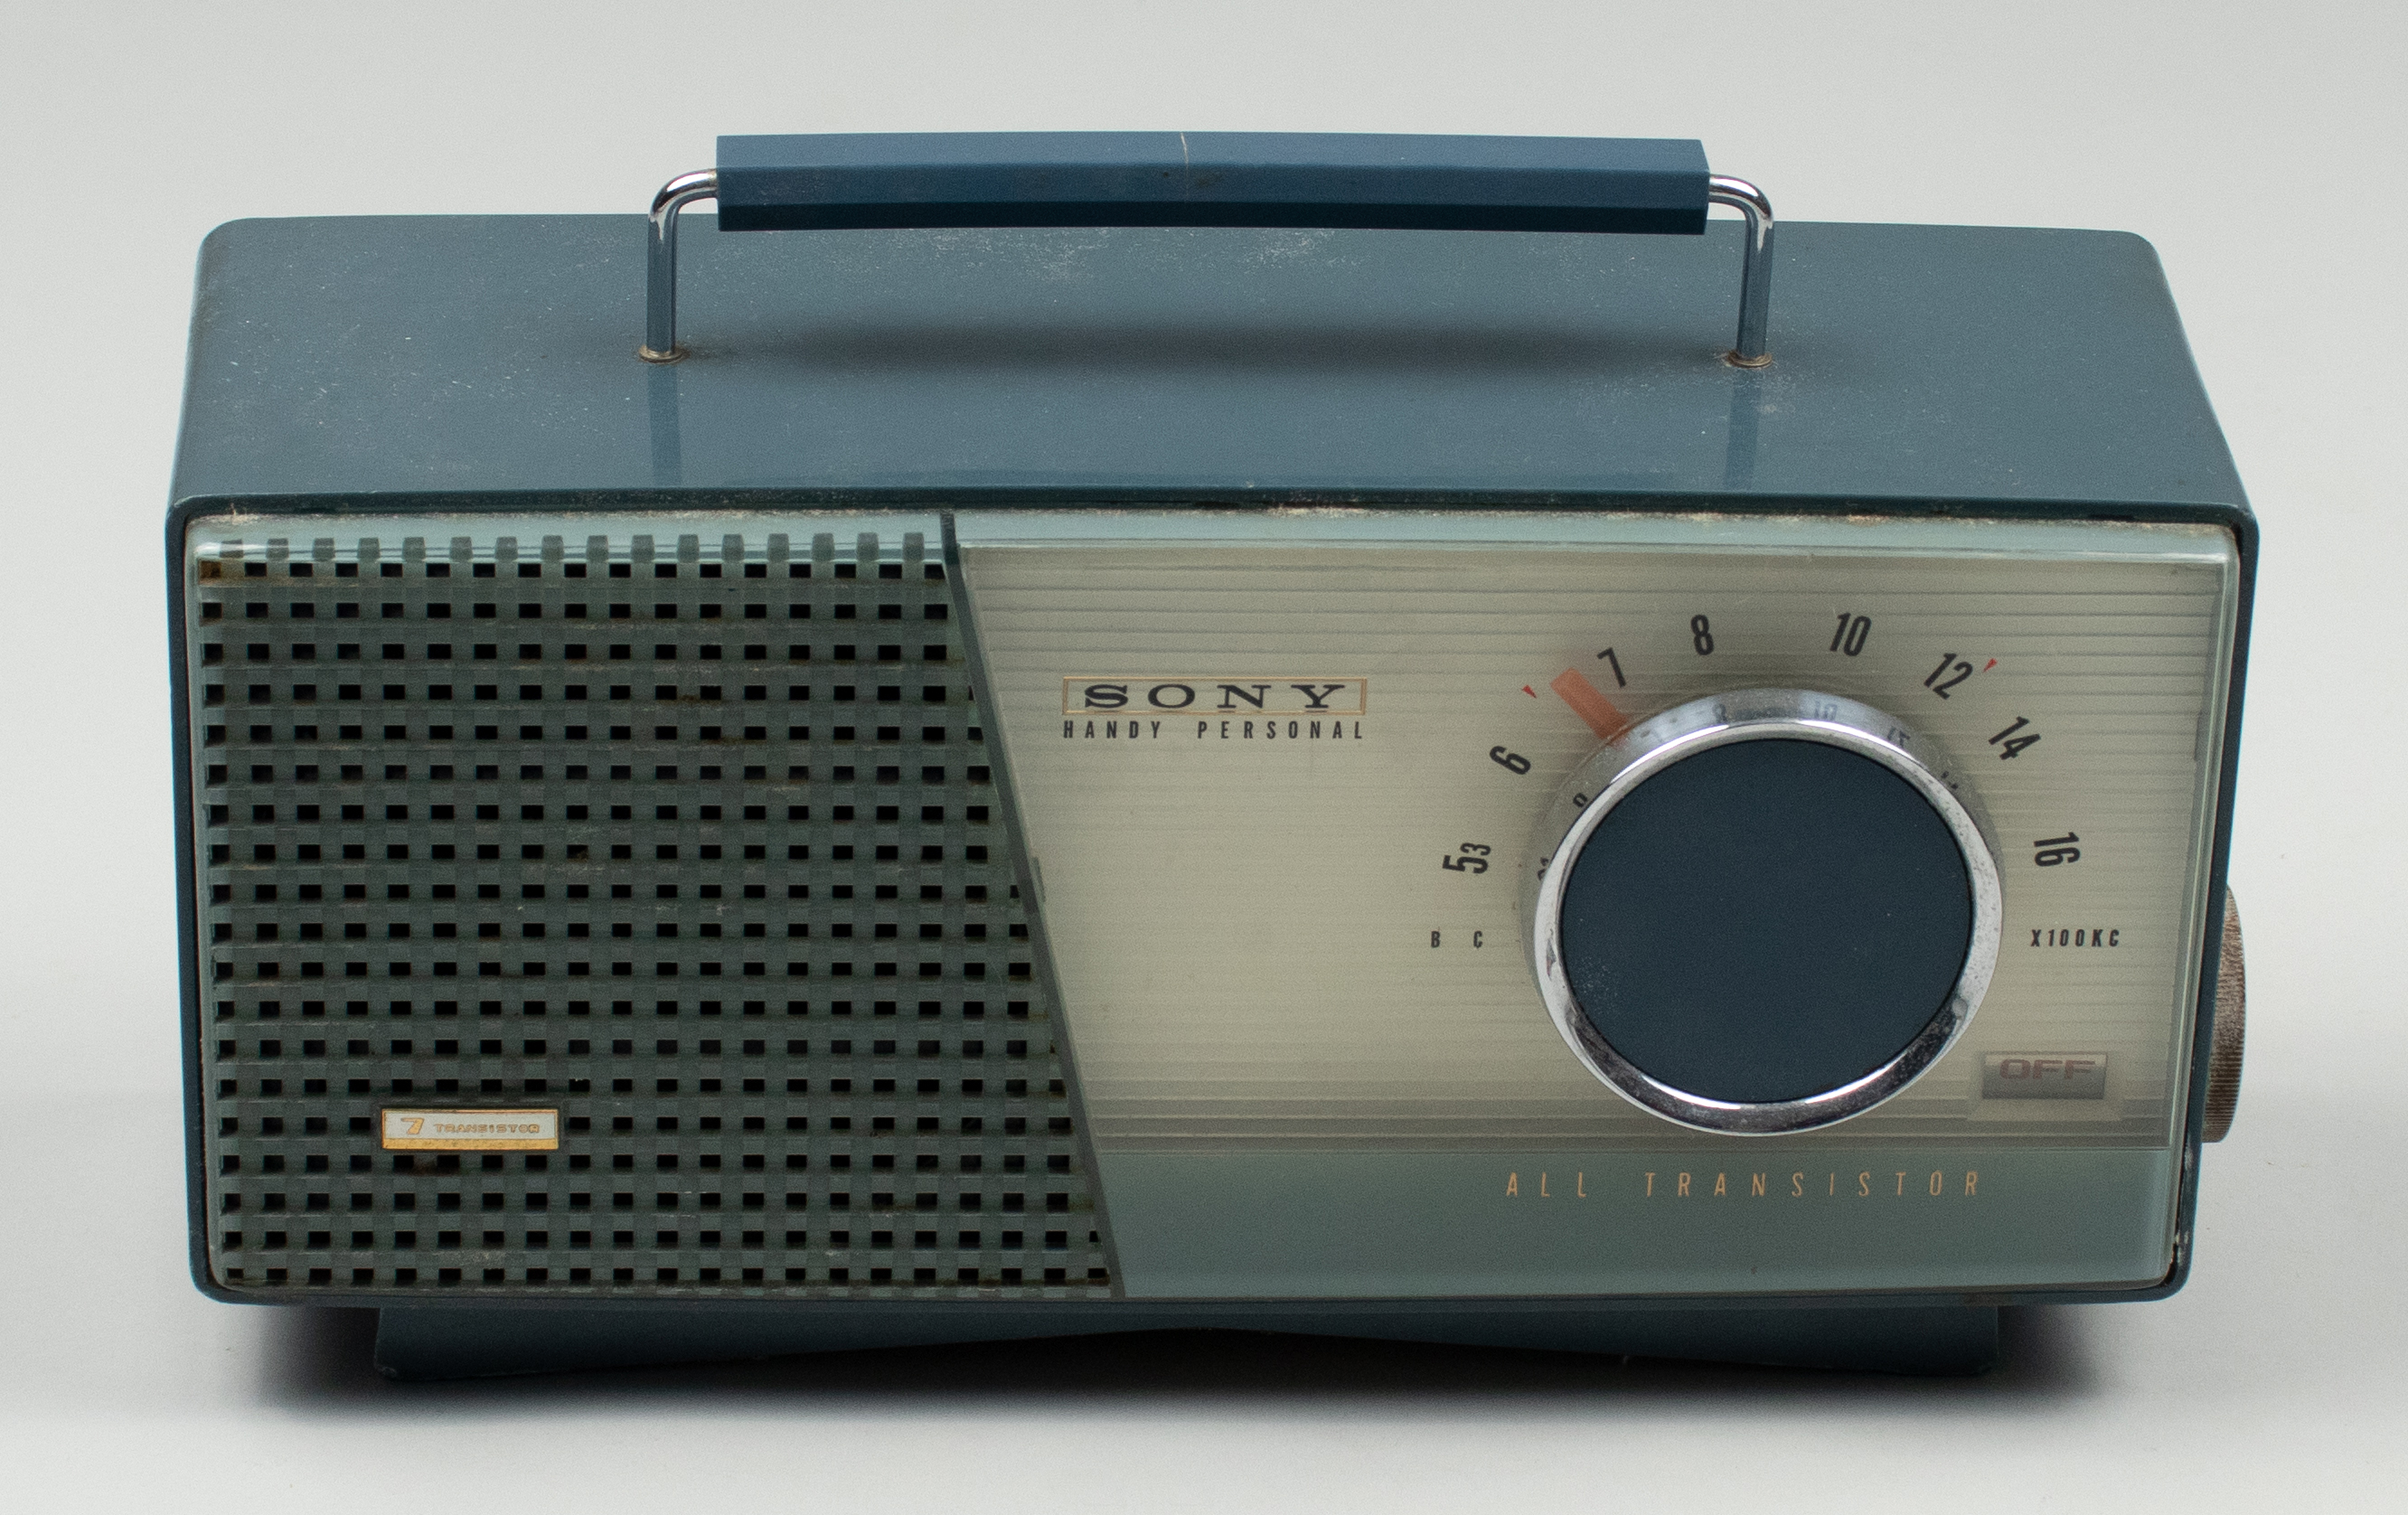 Portable Spinney transistor radio by Perdio Radio Co.